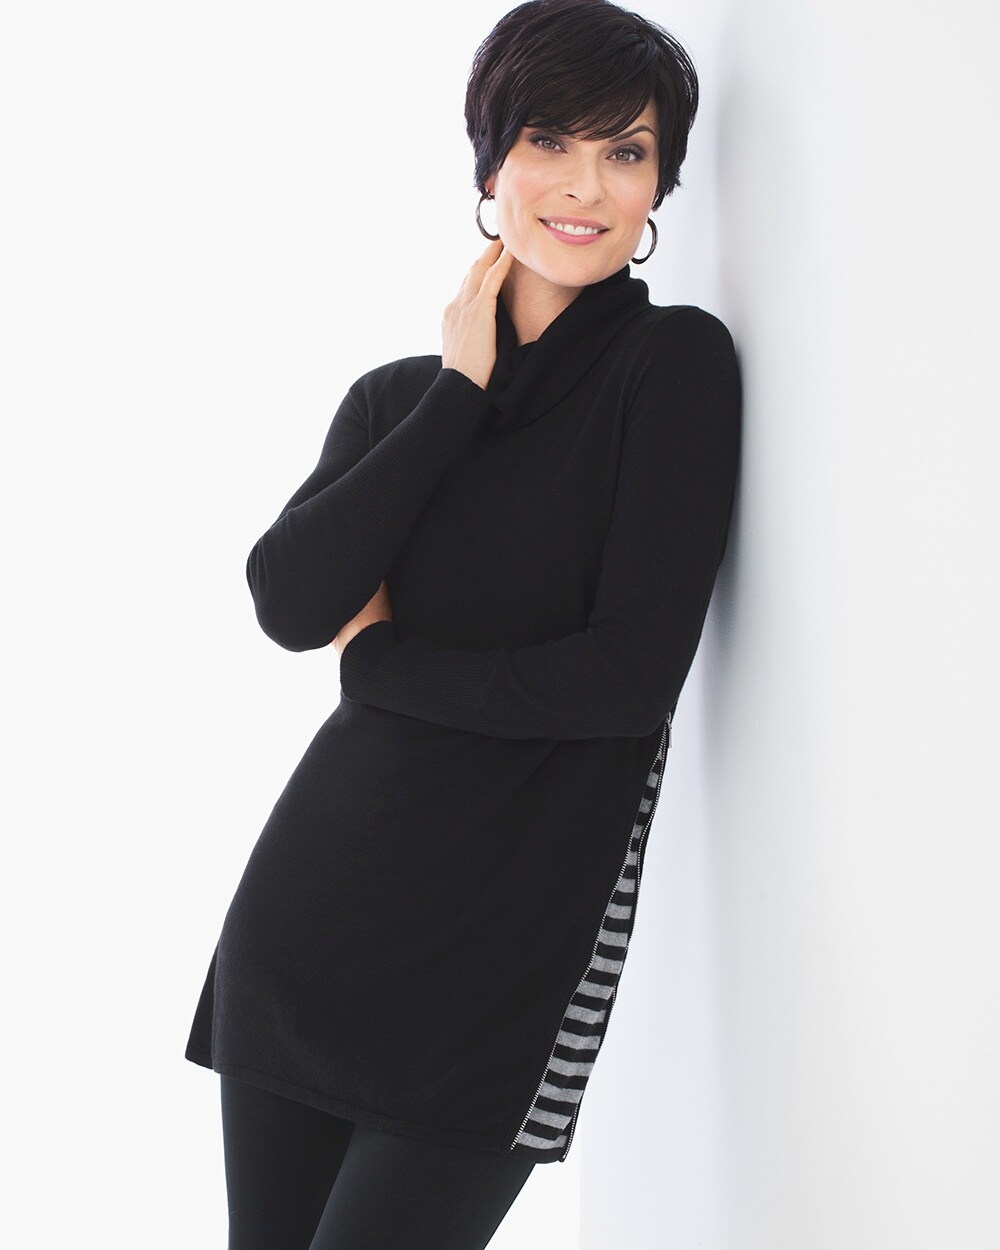 Zenergy Violette Stripe-Inset Sweater in Black